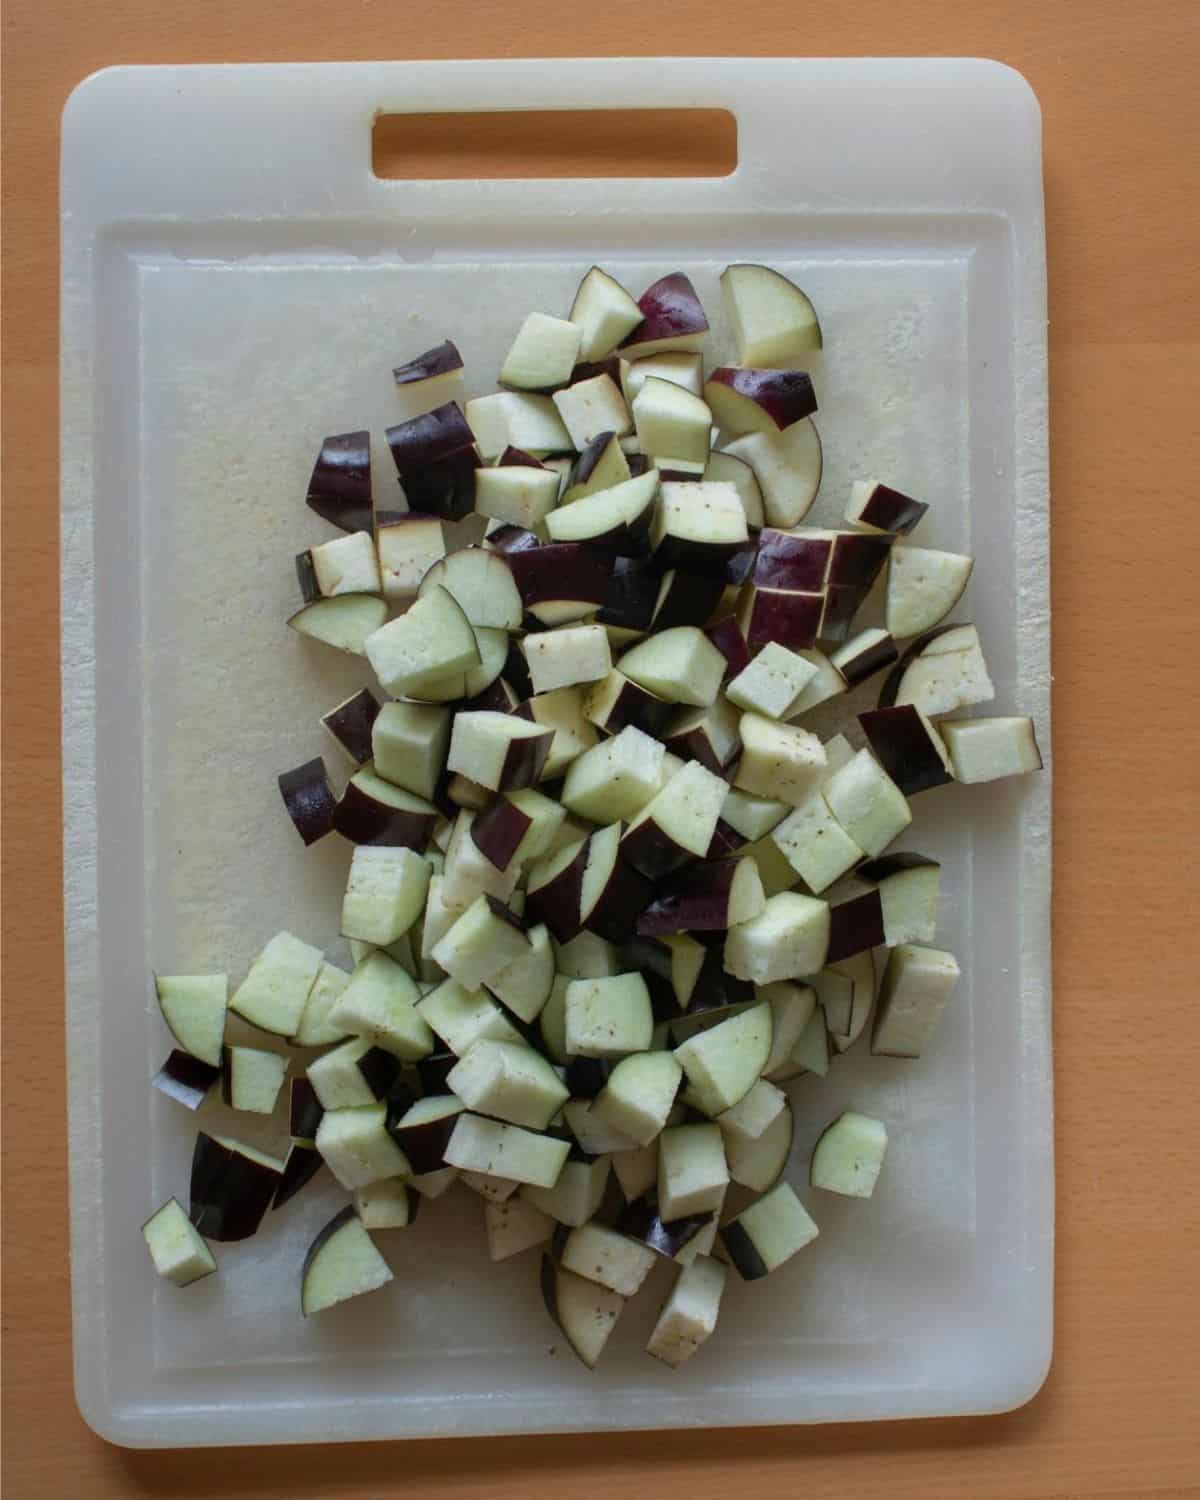 Eggplants cut in cubes